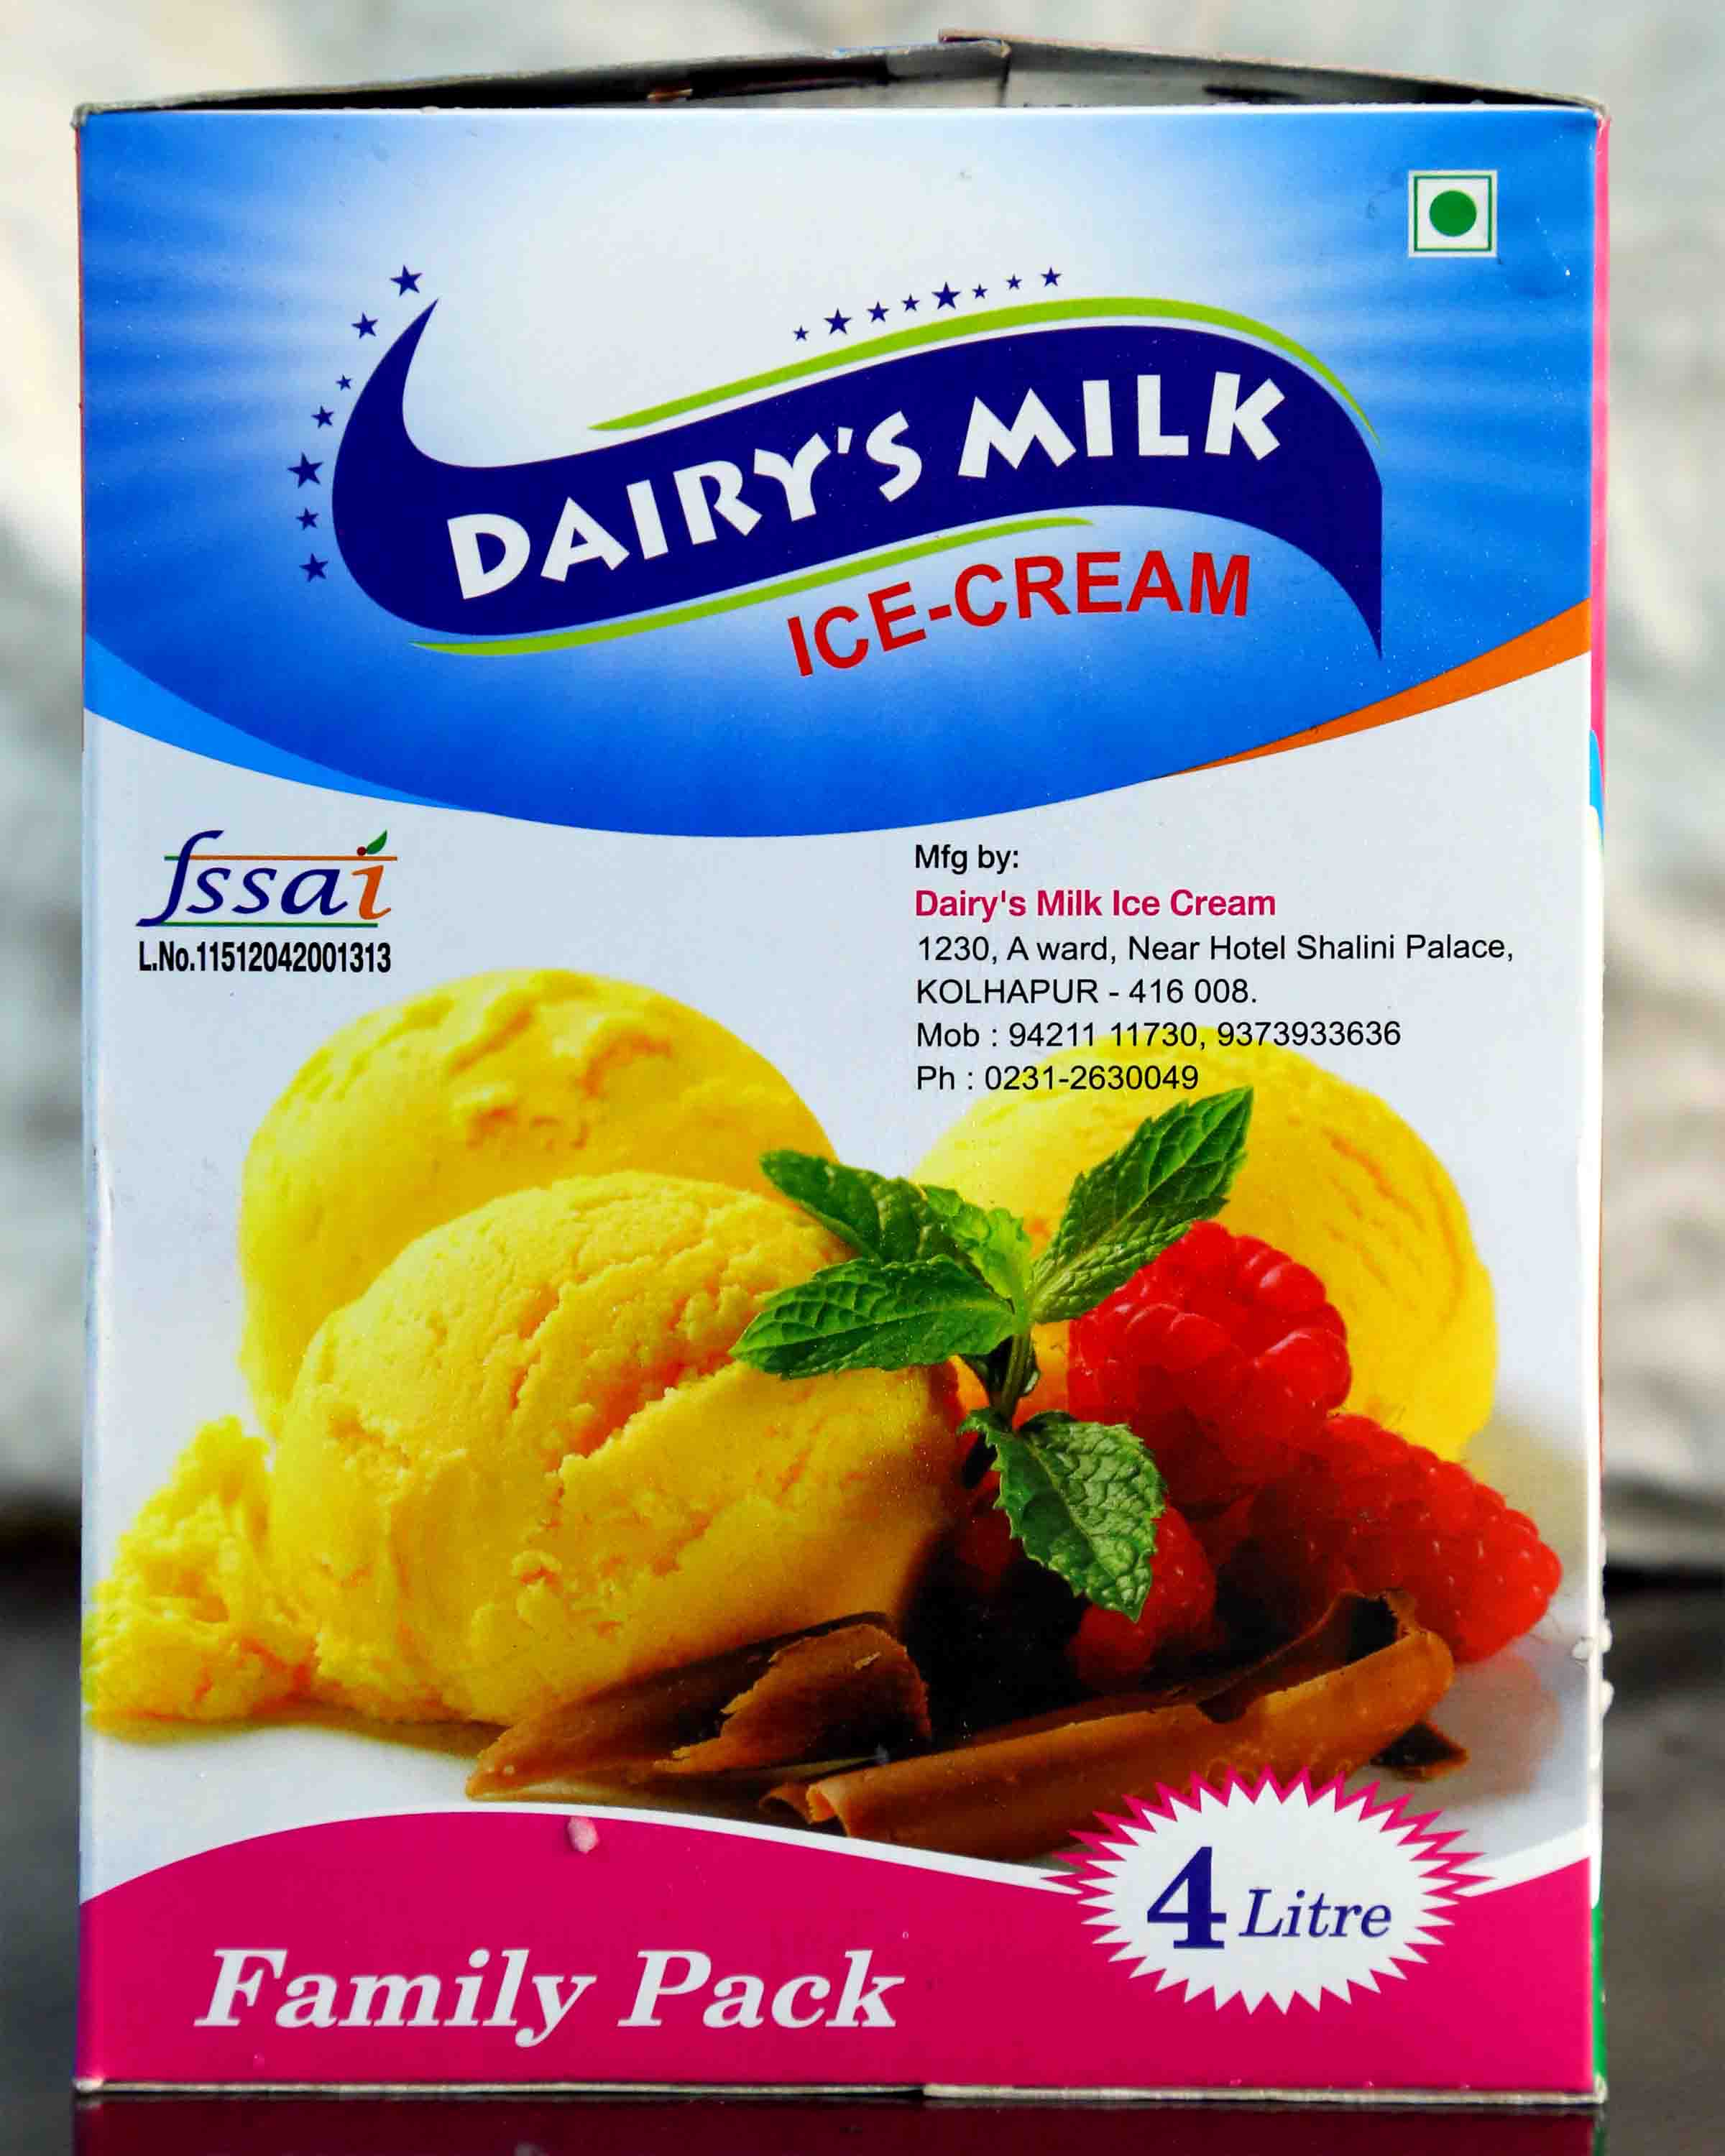 Family Pack Dairys Milk Ice-Cream Kolhapur